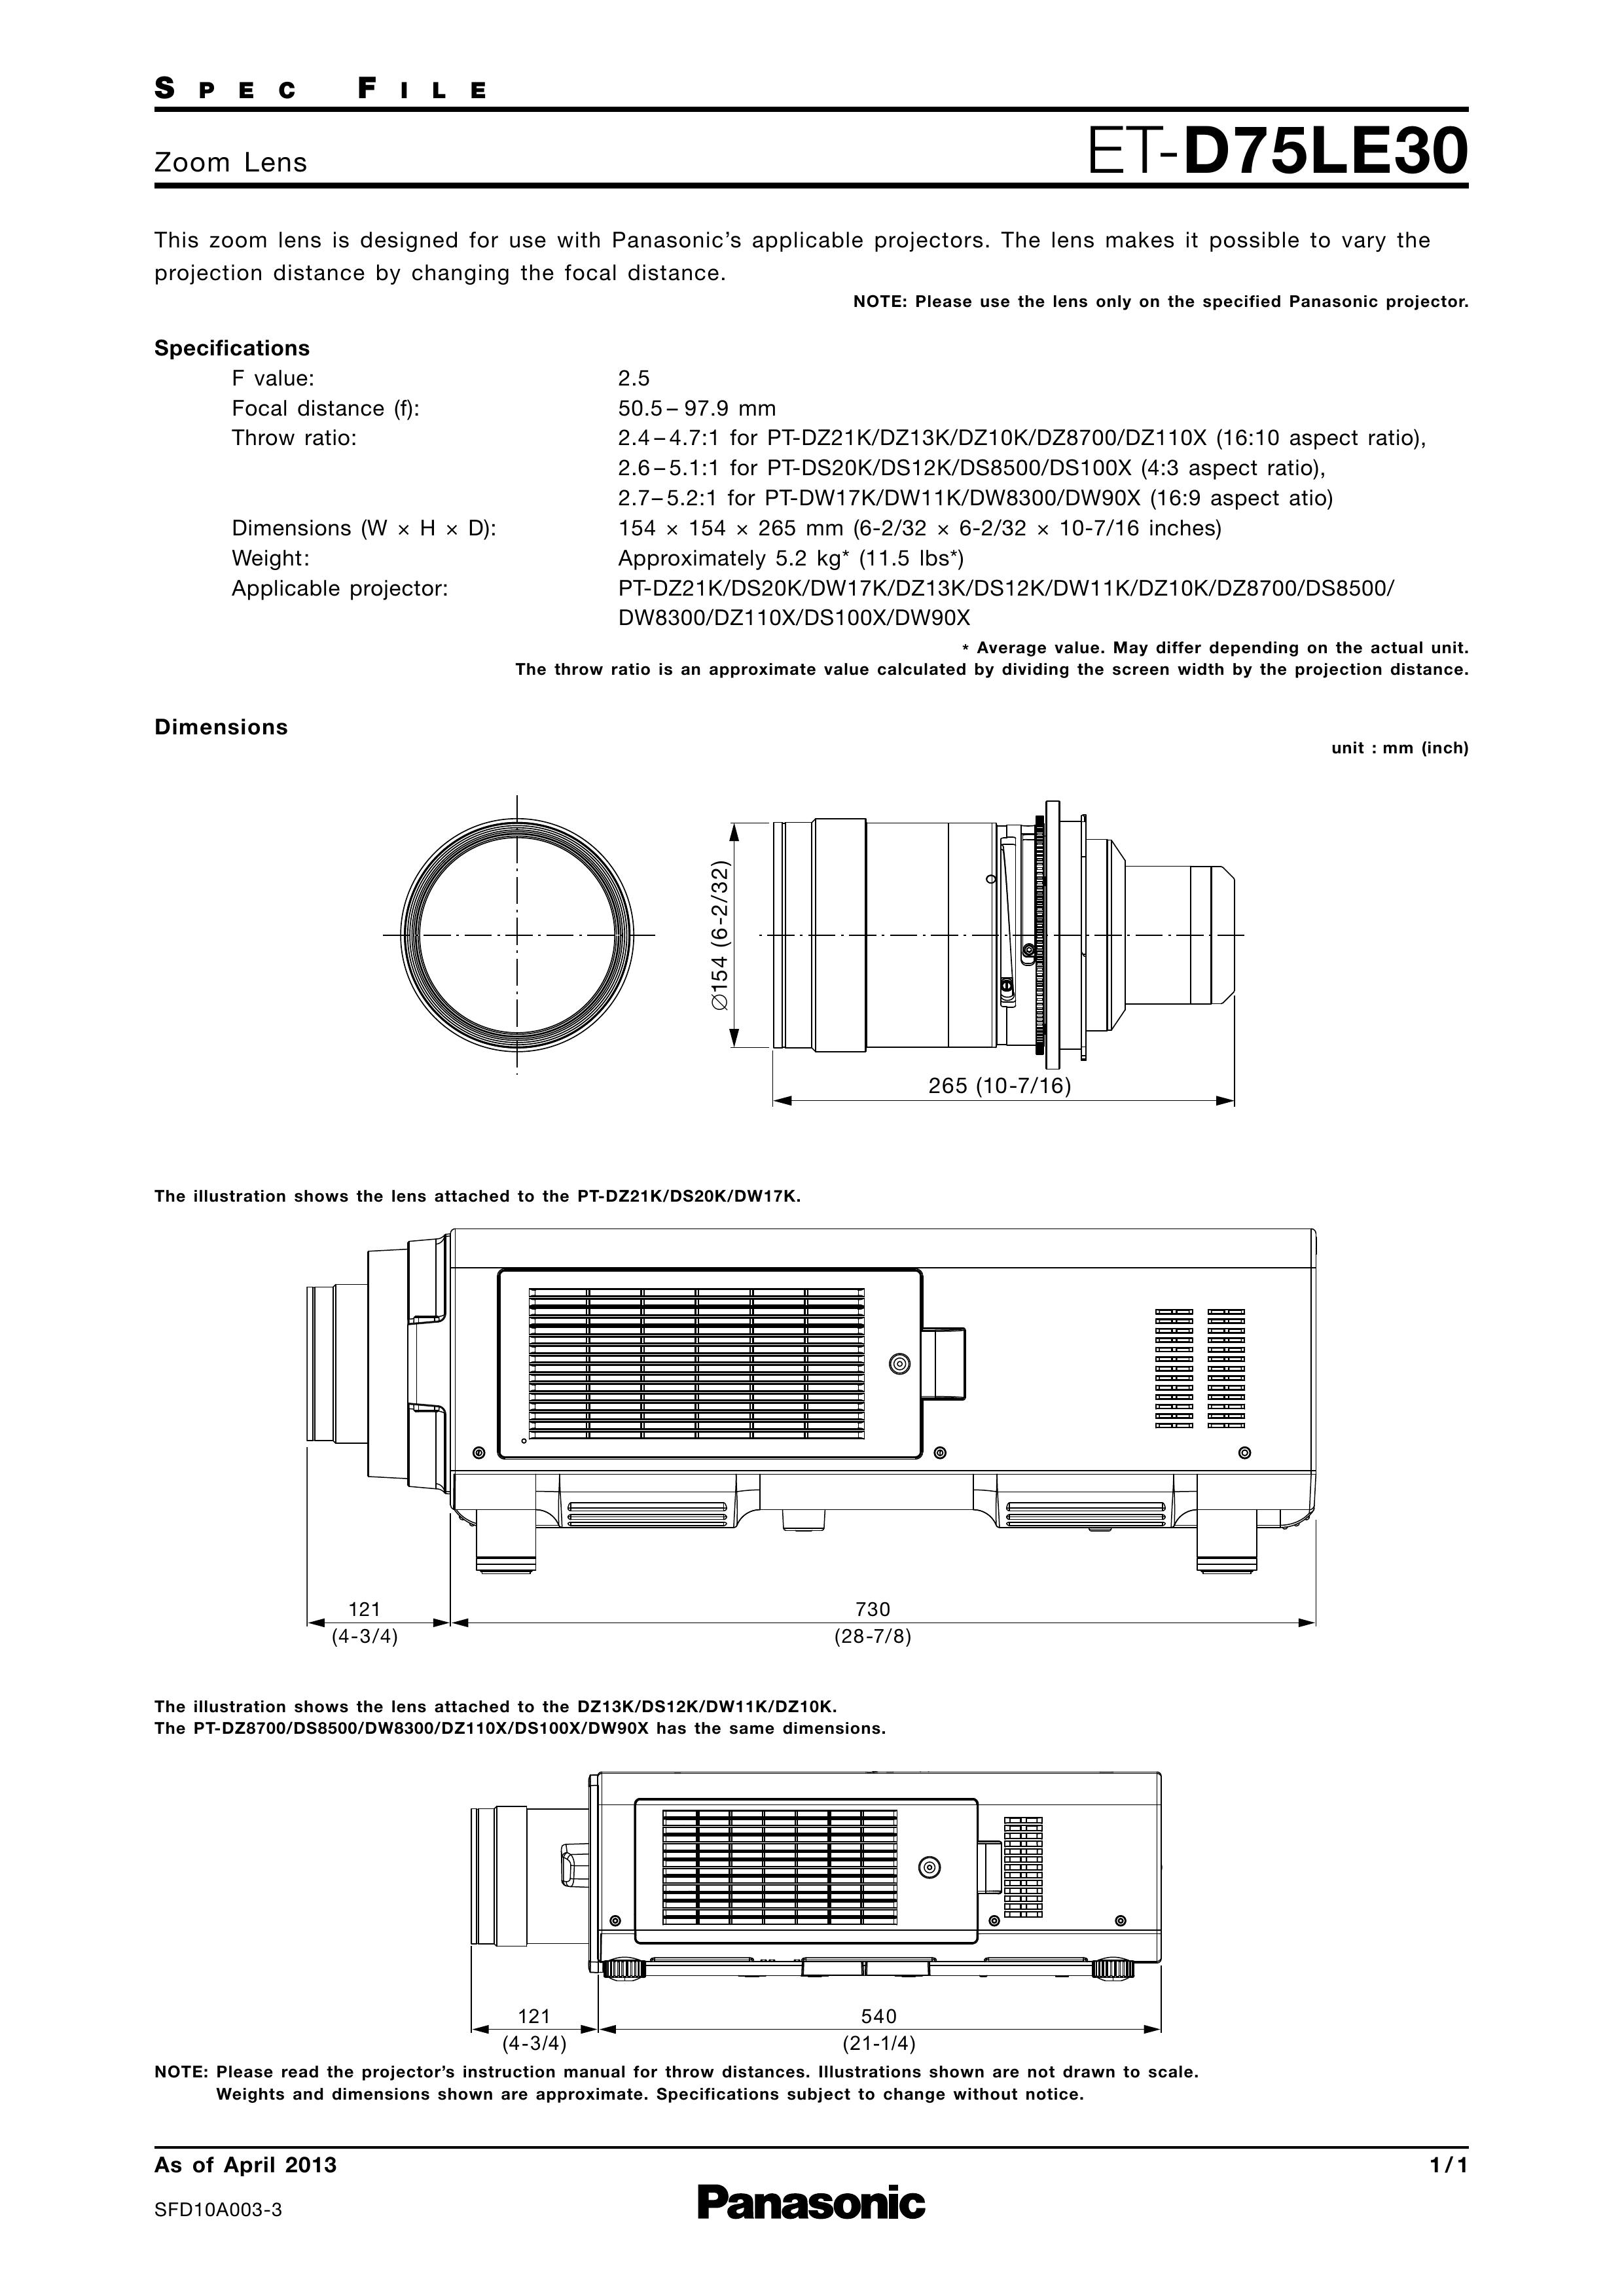 Panasonic ETD75LE30 Camera Accessories User Manual